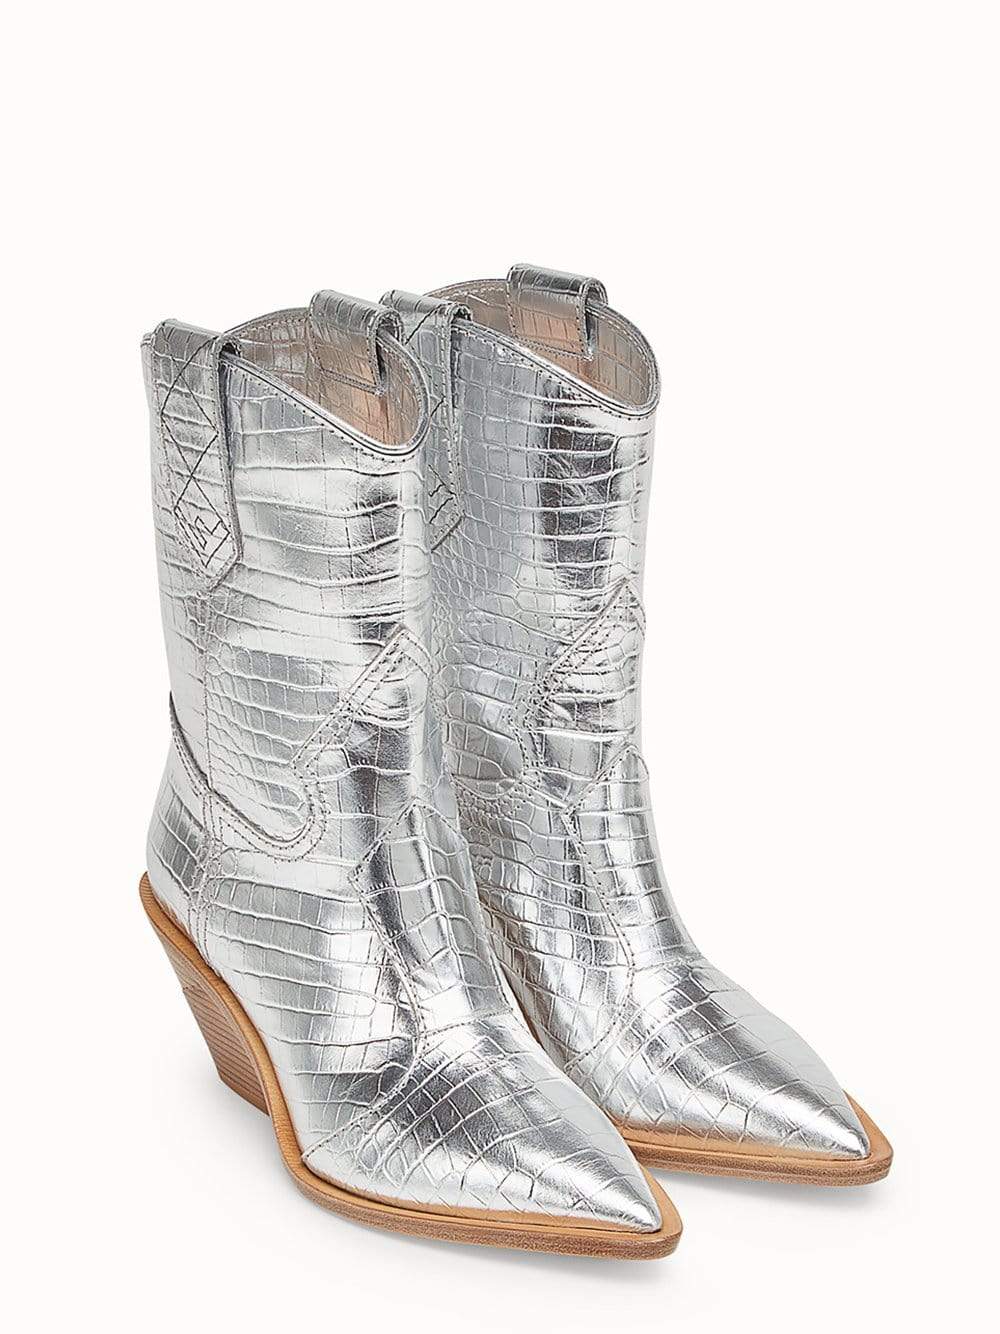 Cutwalk Mid Boot in Silver